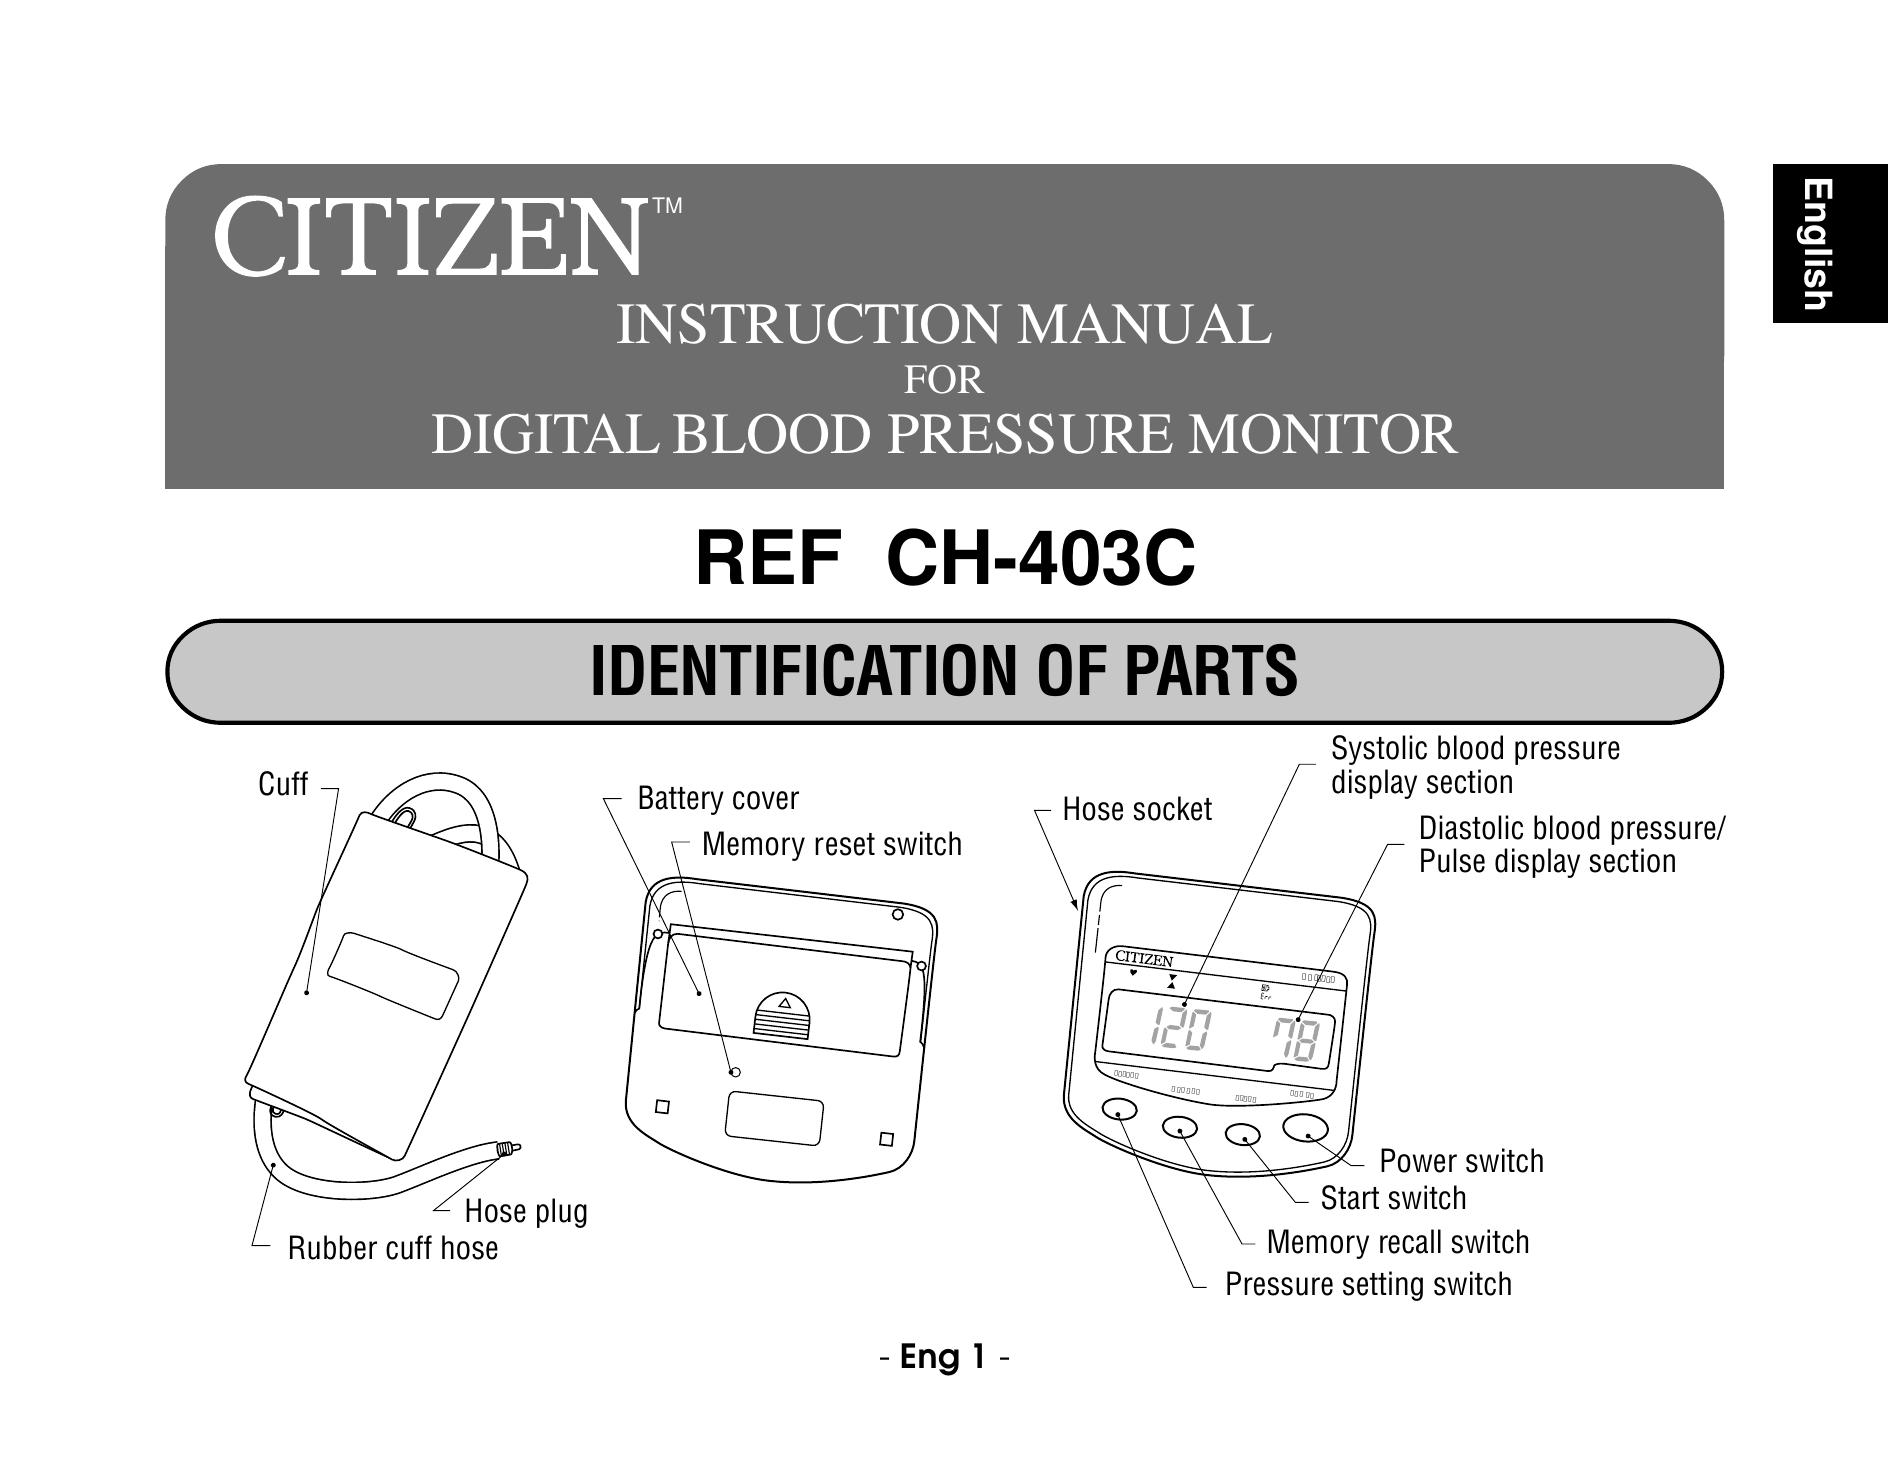 Citizen CH-403C Blood Pressure Monitor User Manual